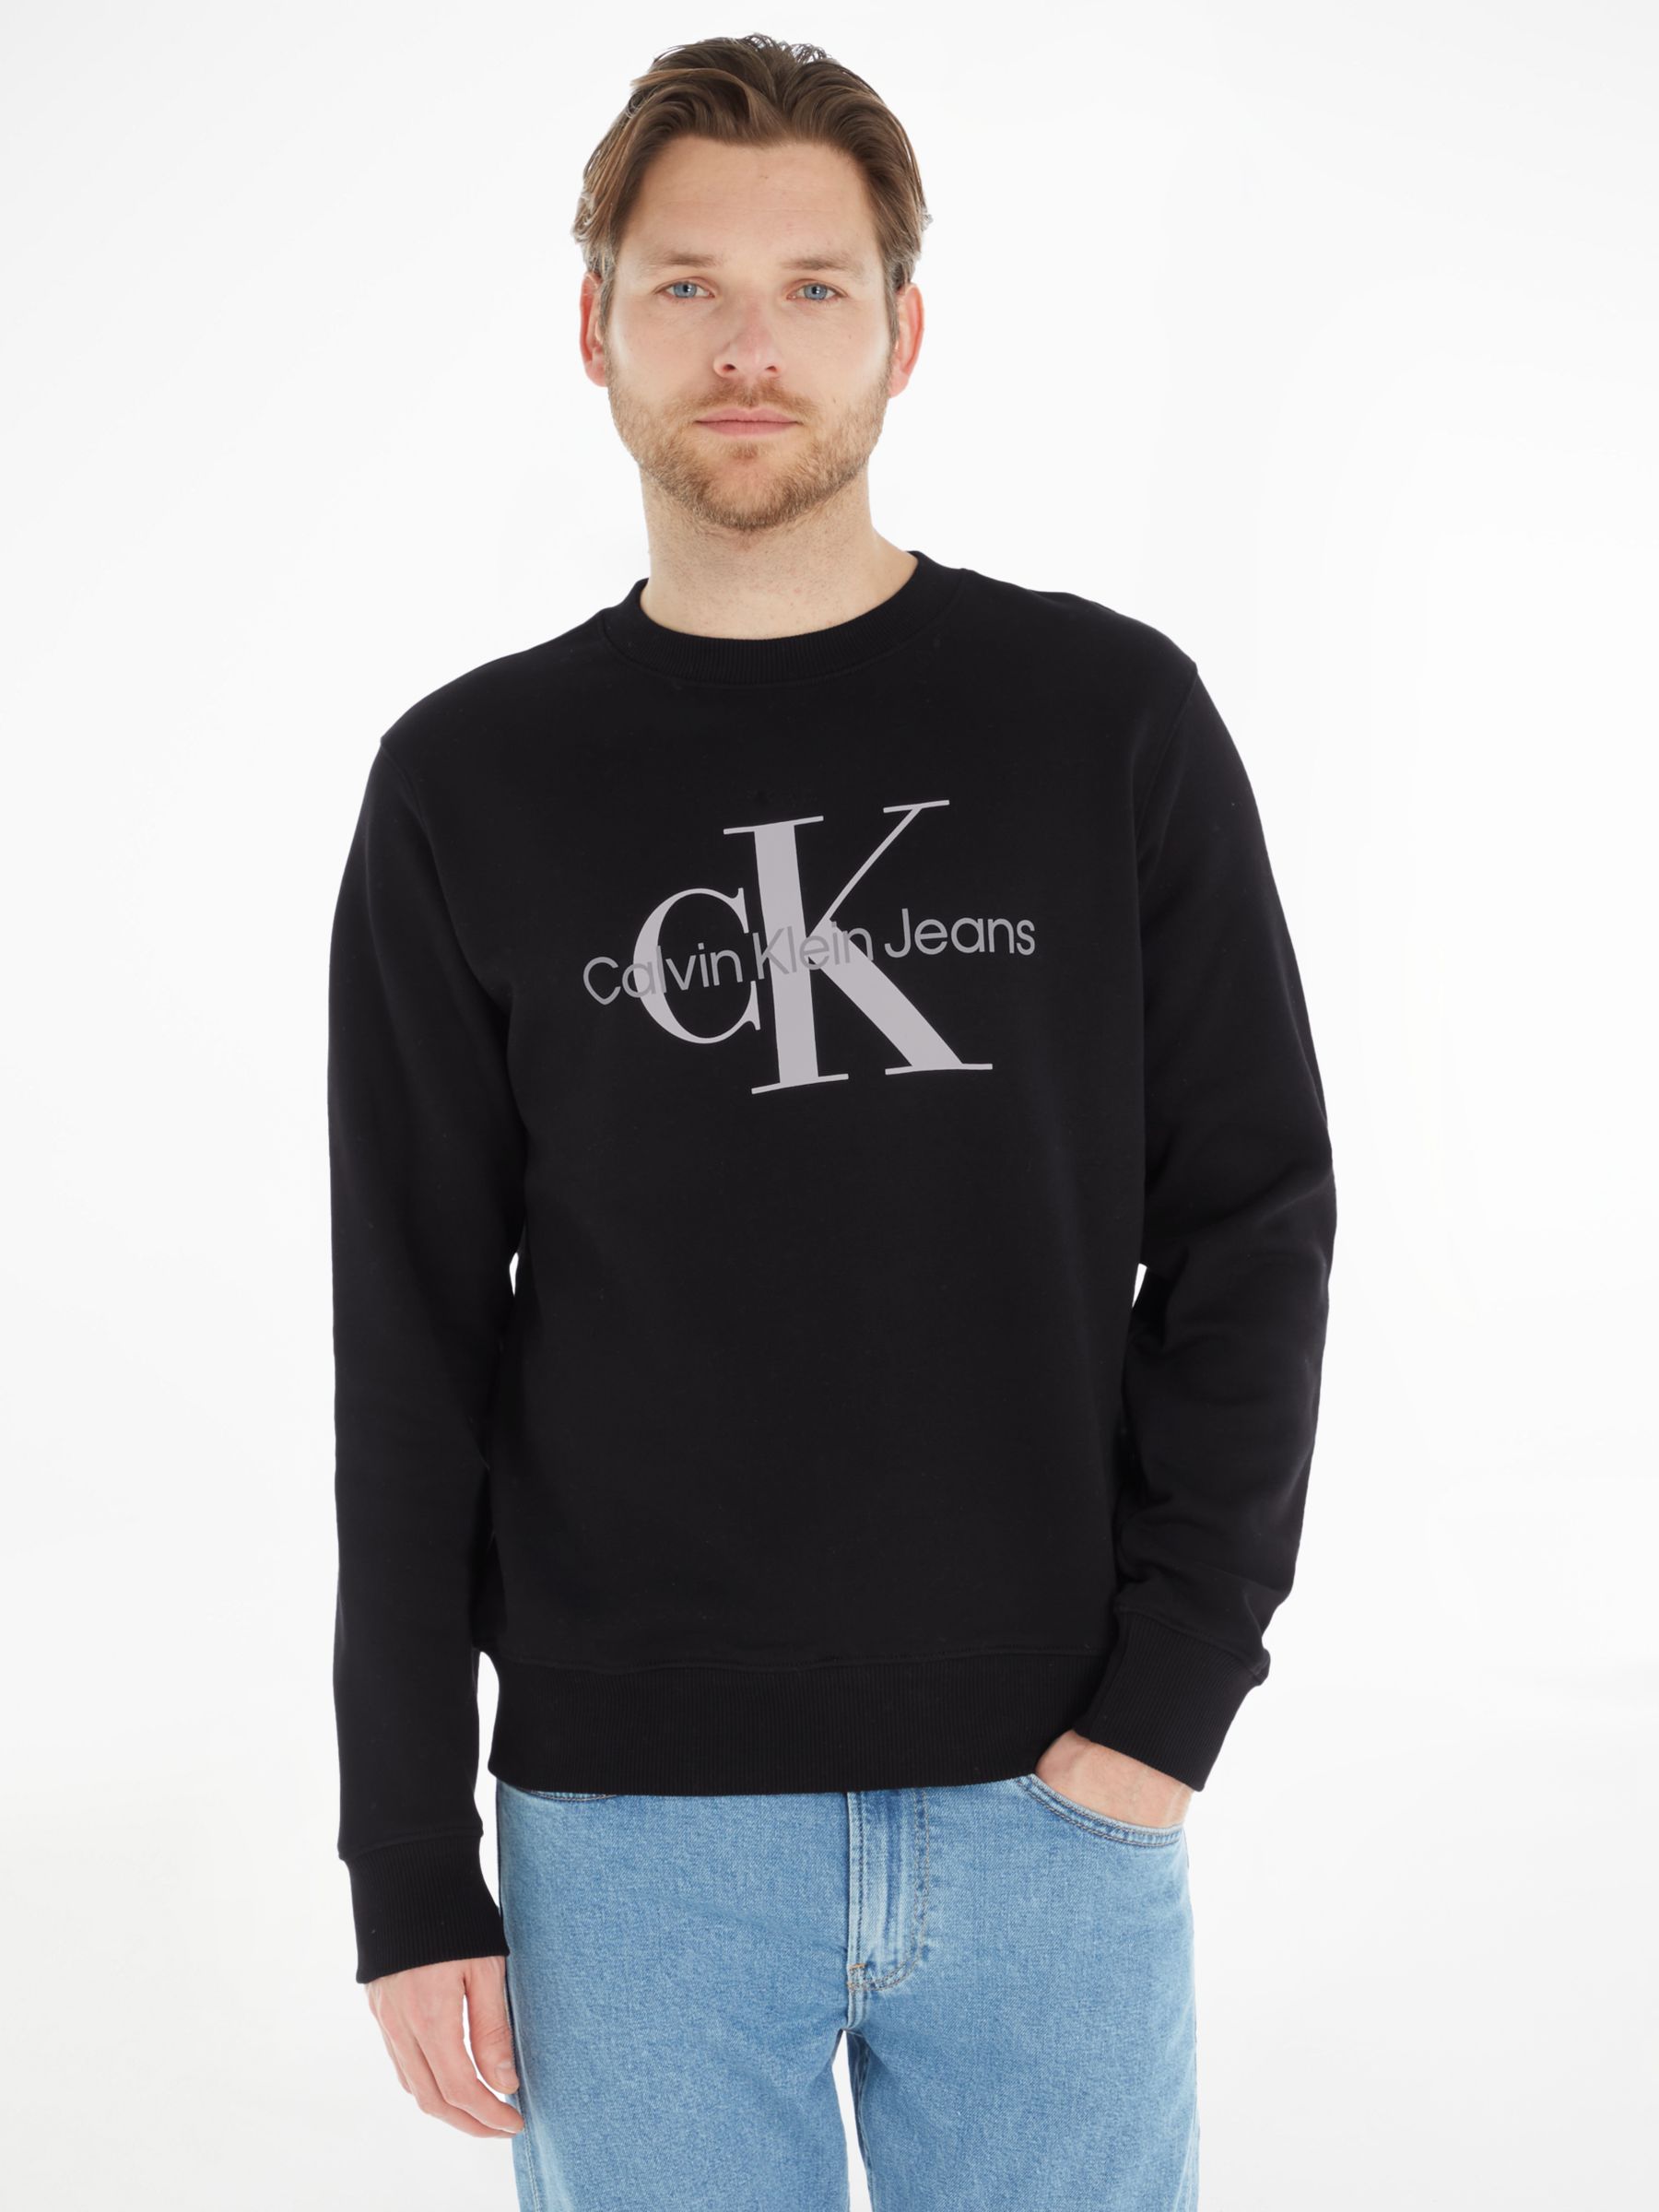 Monogram Lewis Black Klein Logo John Cotton Ck Calvin at Partners & Sweatshirt, Core Jeans